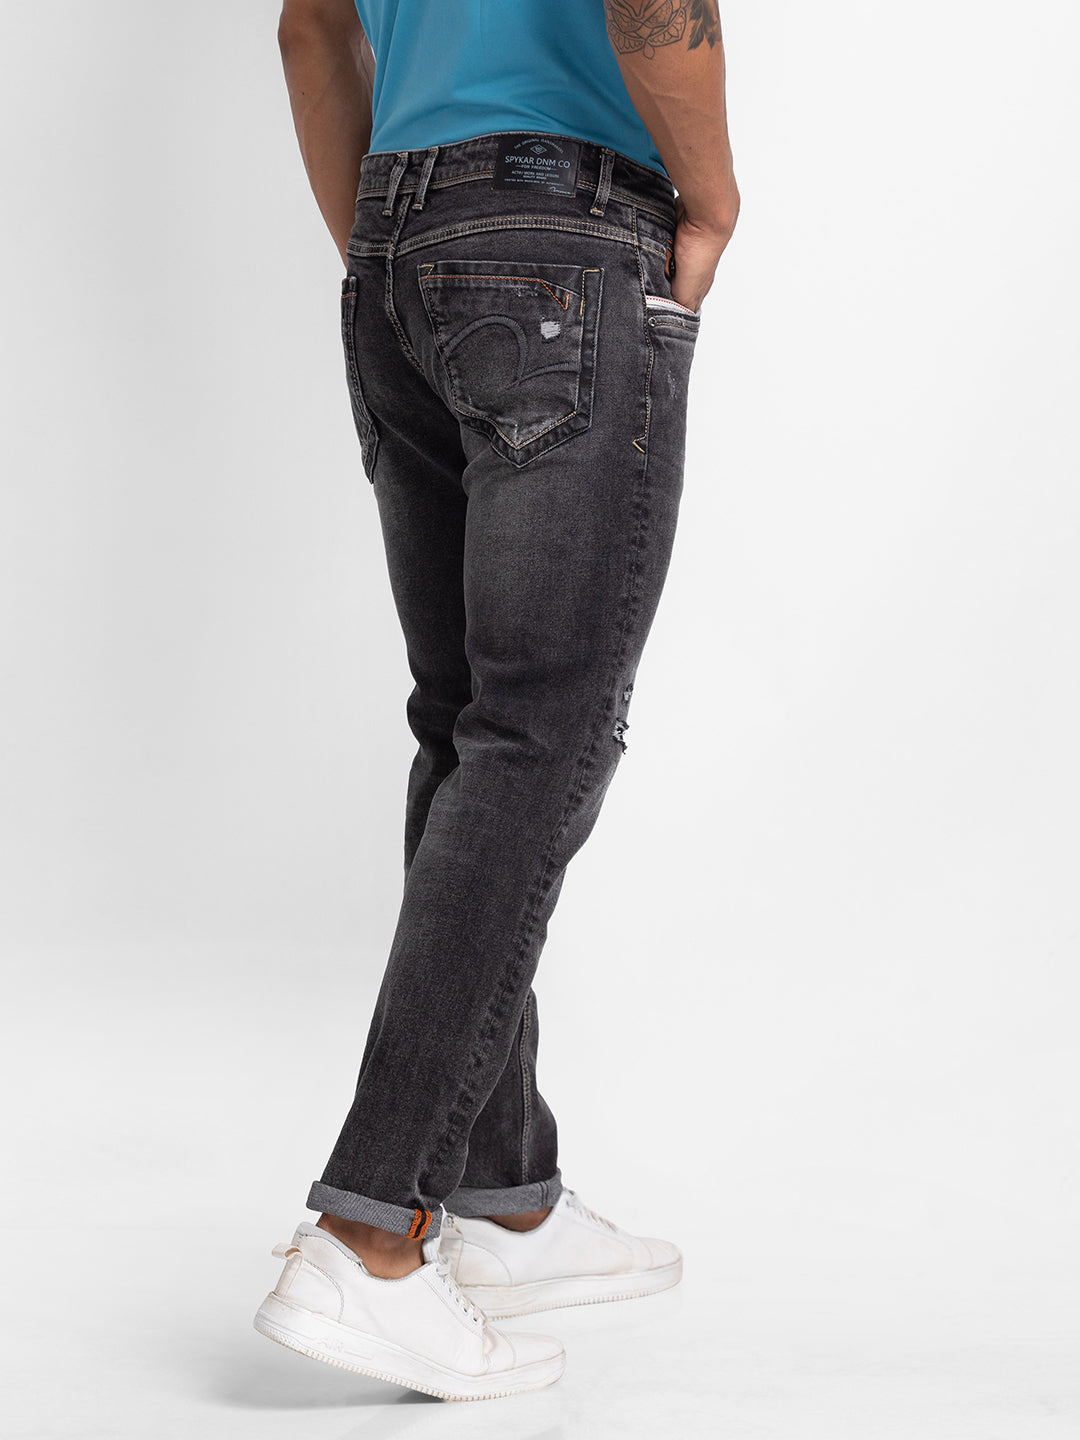 Spykar Carbon Black Cotton Slim Fit Narrow Length Jeans For Men (Skinny)